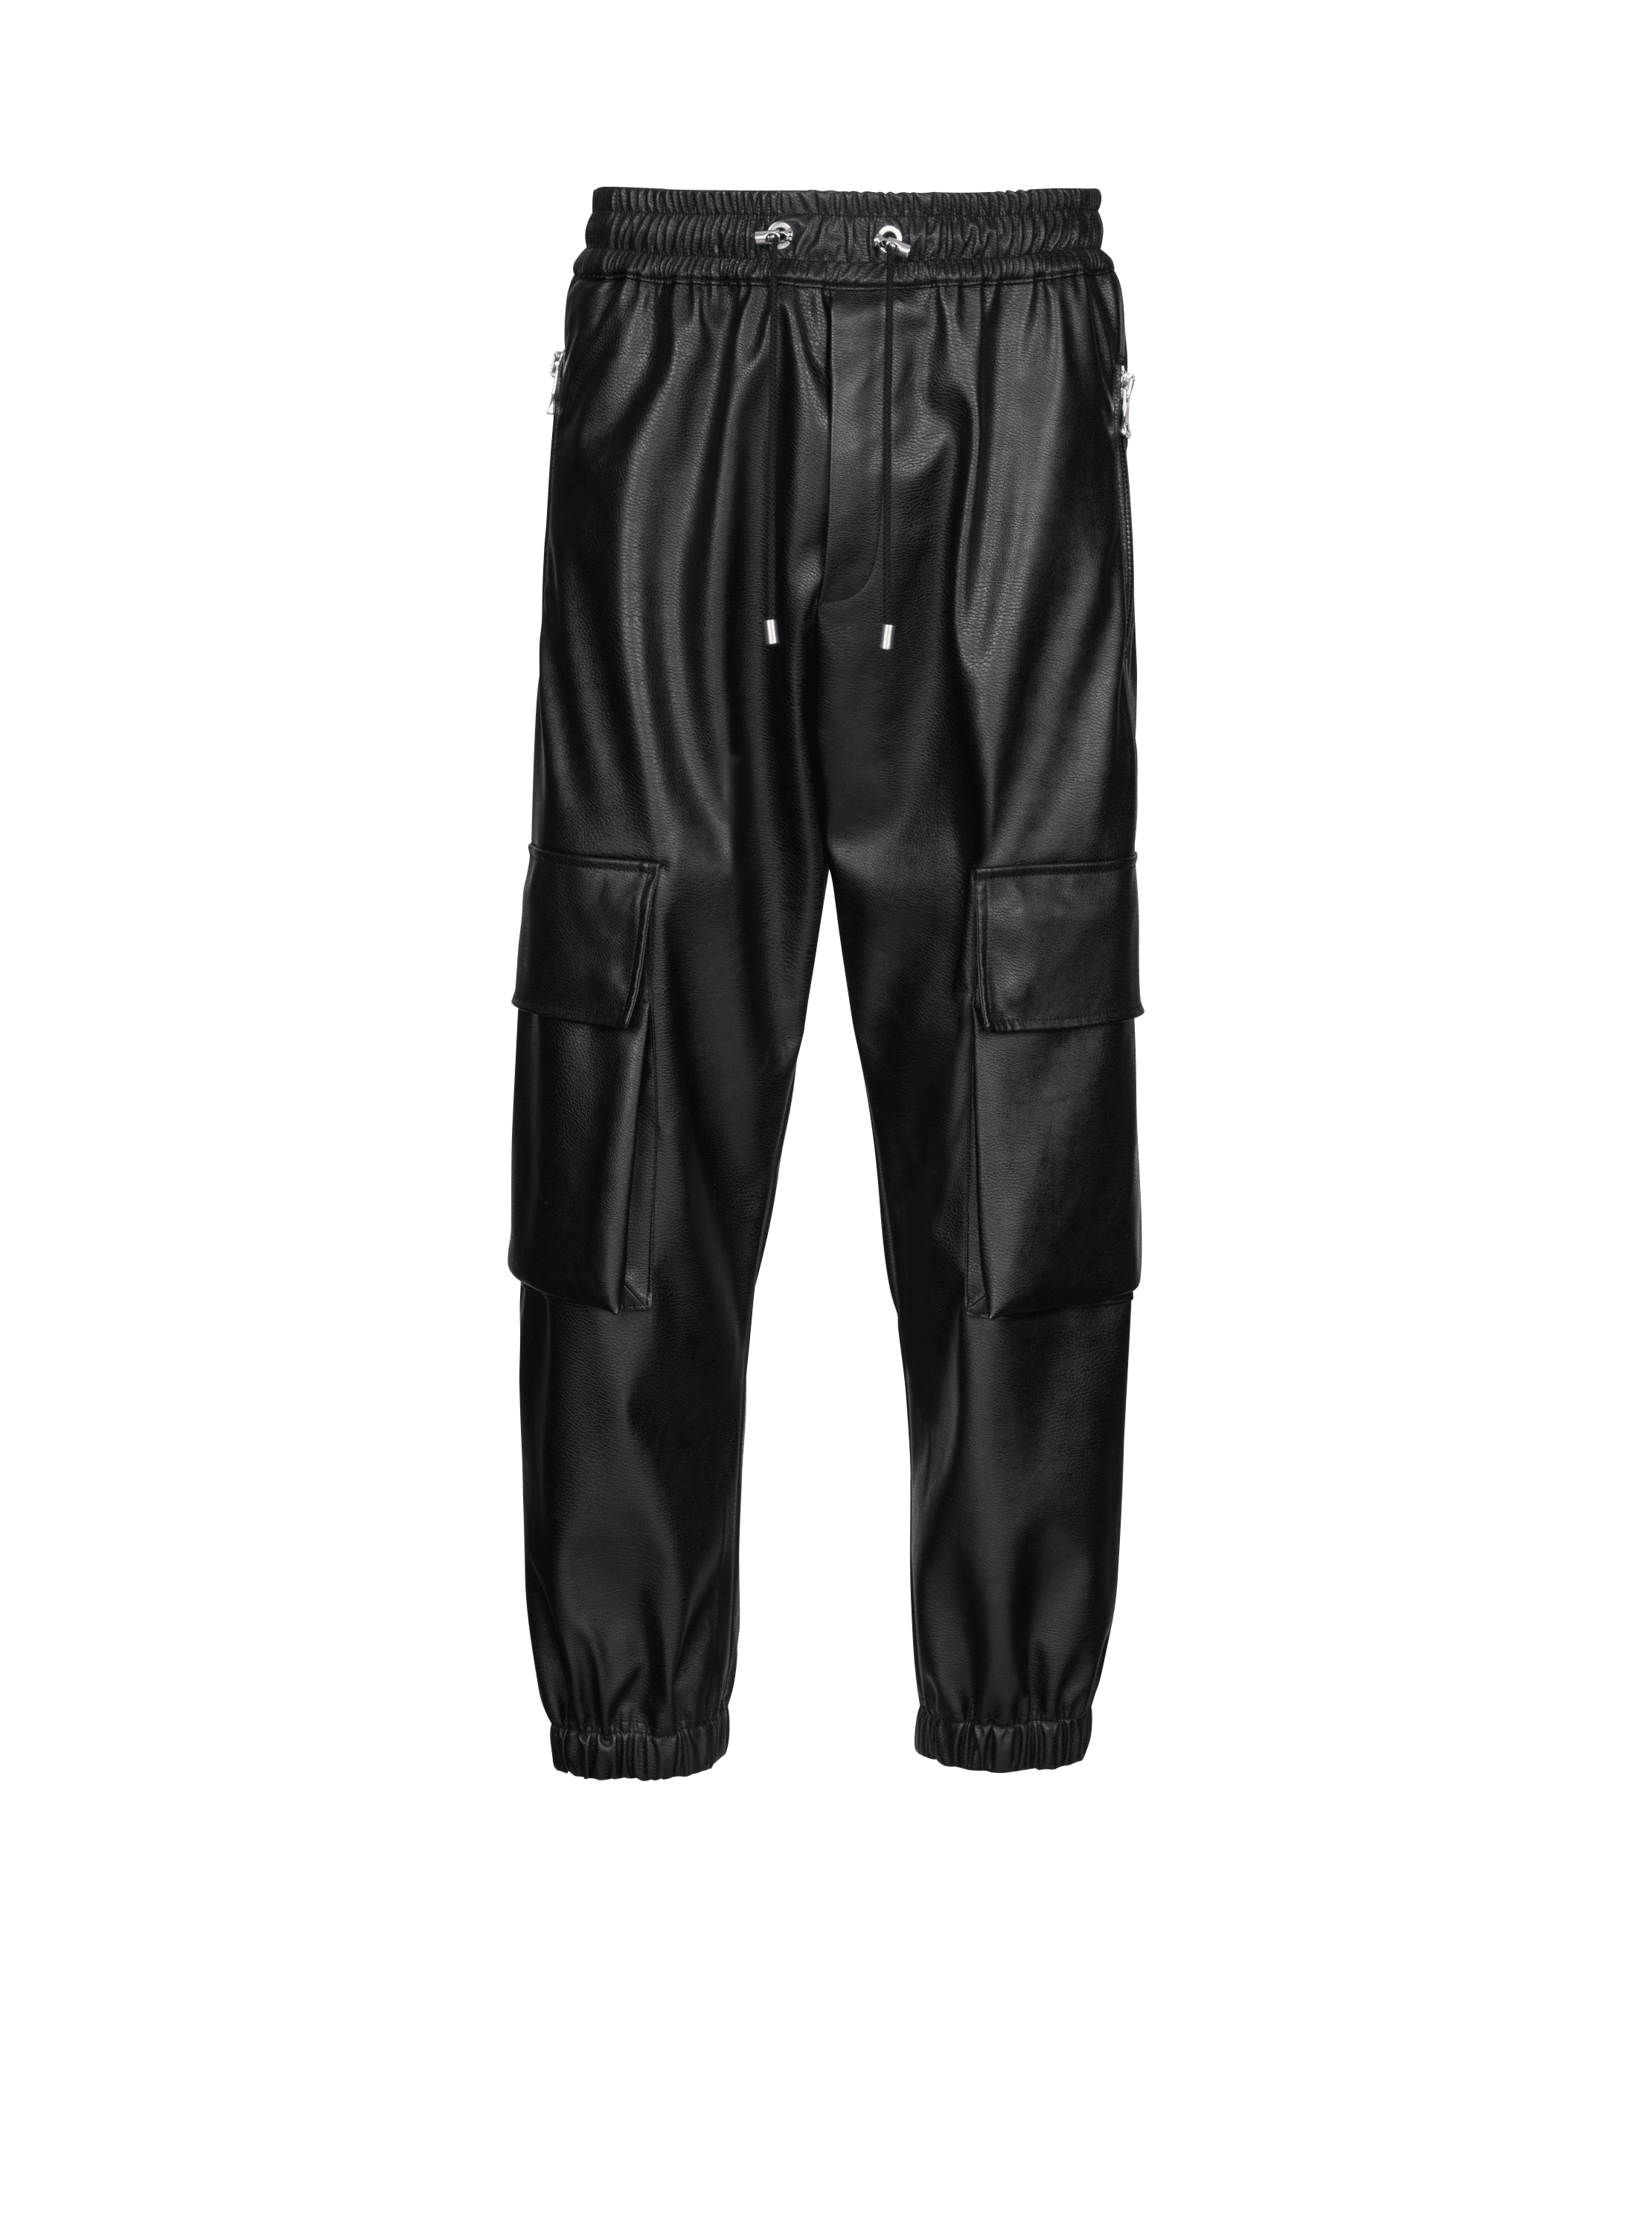 Pantalones tipo cargo de piel sintética, negro, hi-res